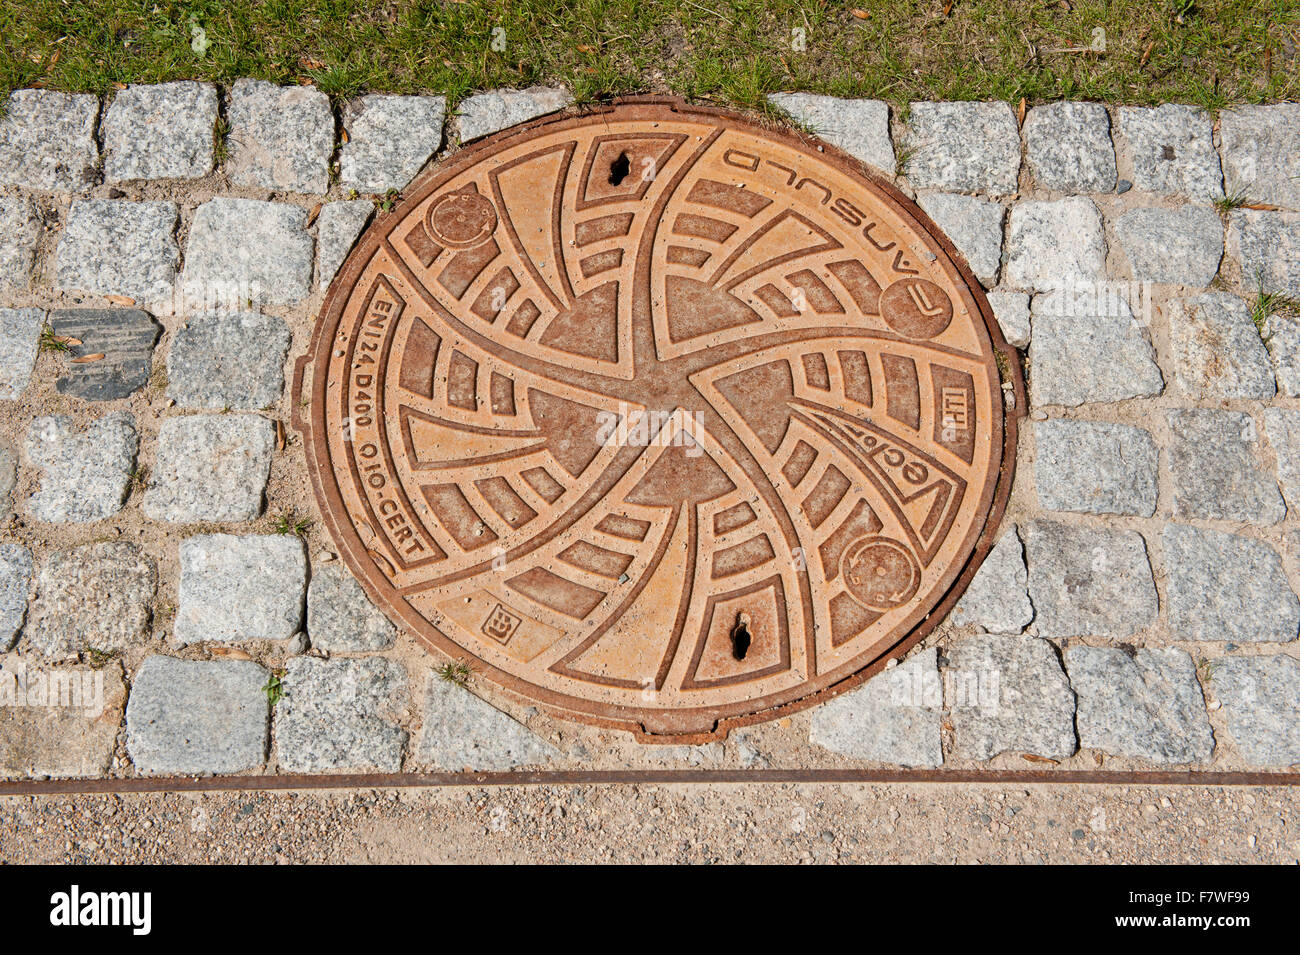 Decorative brown manhole cover of sewage well by Fansuld in park Lazienki Krolewskie w Warszawie, Royal Baths Park, Warsaw... Stock Photo